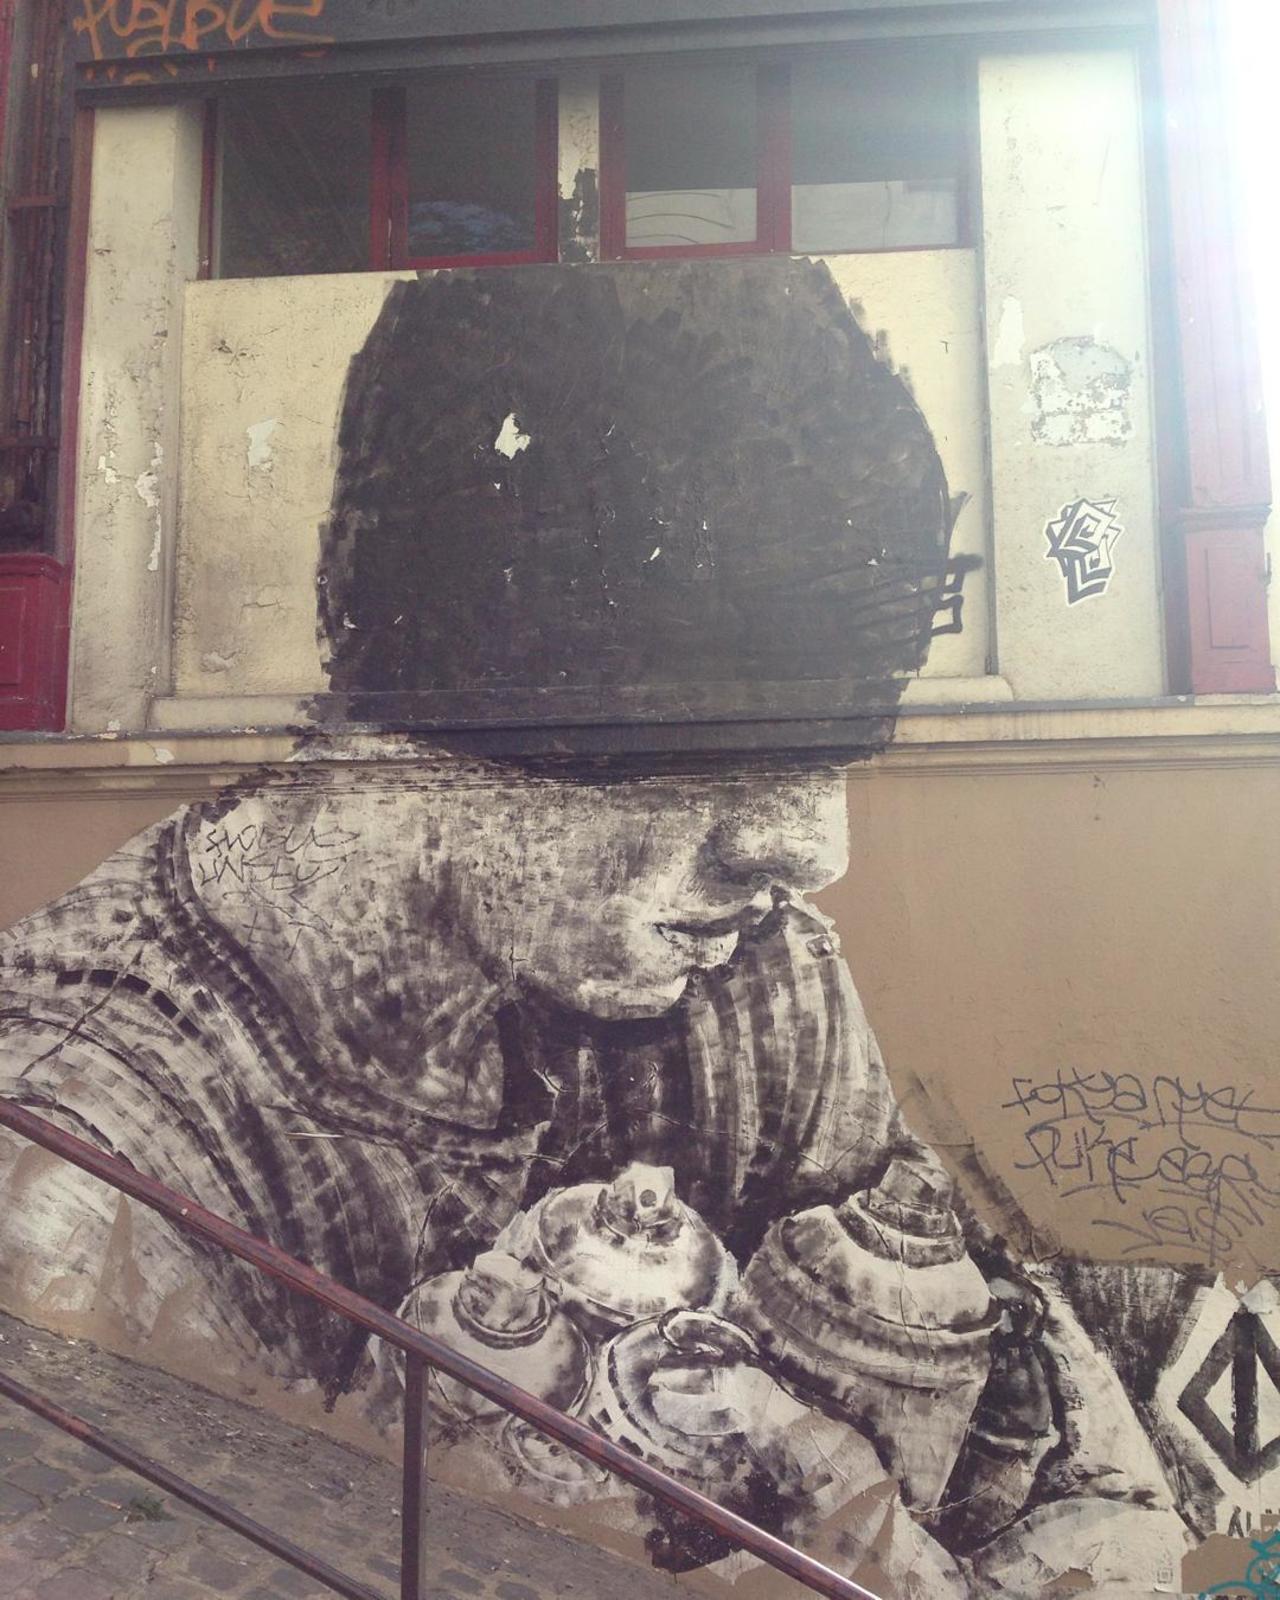 circumjacent_fr: #Paris #graffiti photo by streetrorart http://ift.tt/1R3B5EG #StreetArt https://t.co/7vodOY0Mn5